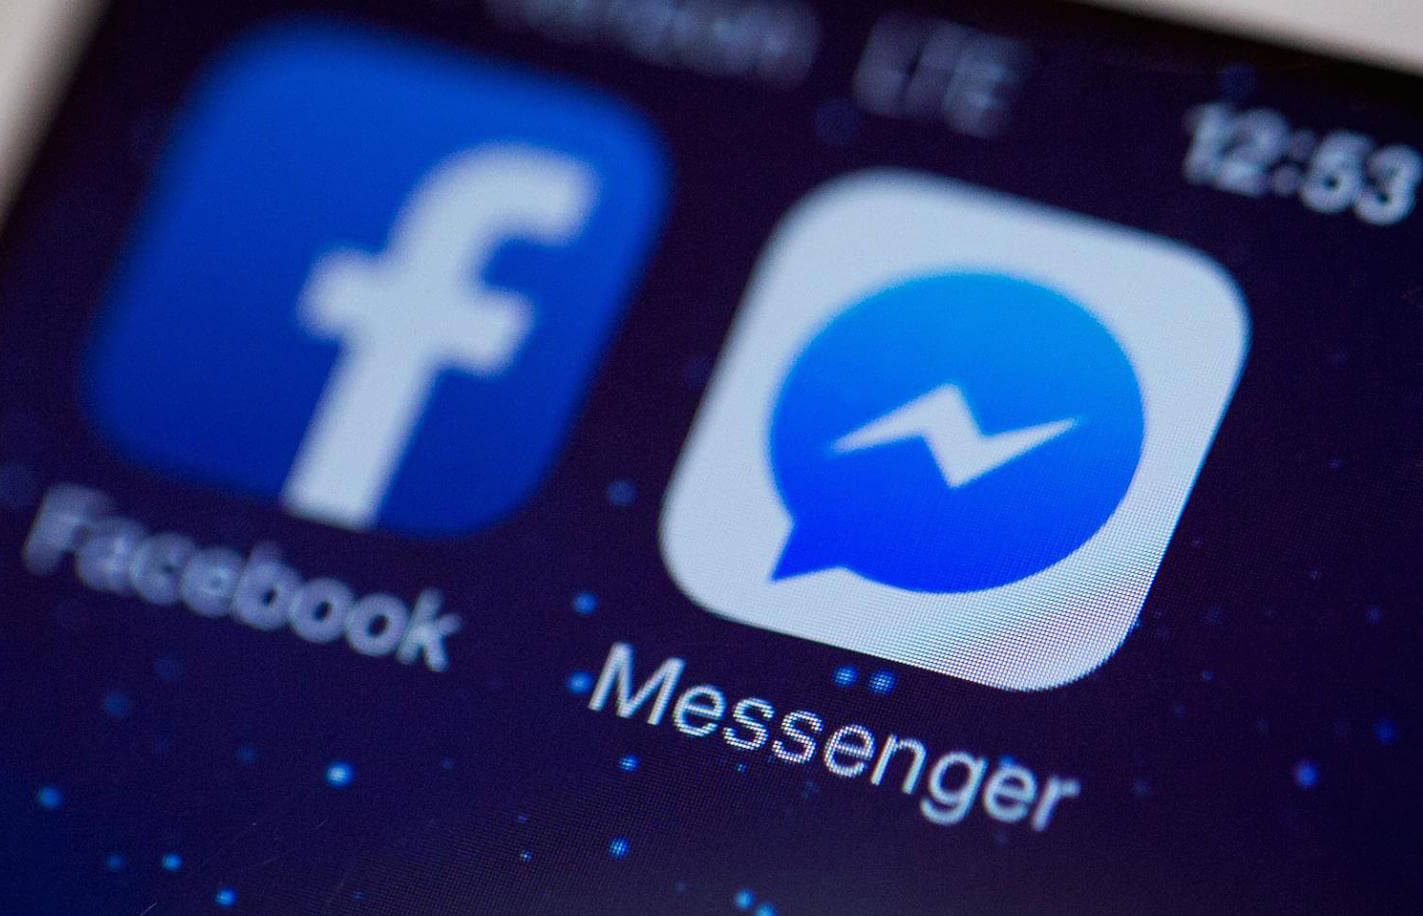 Meta is bringing Messenger back to the Facebook mobile app